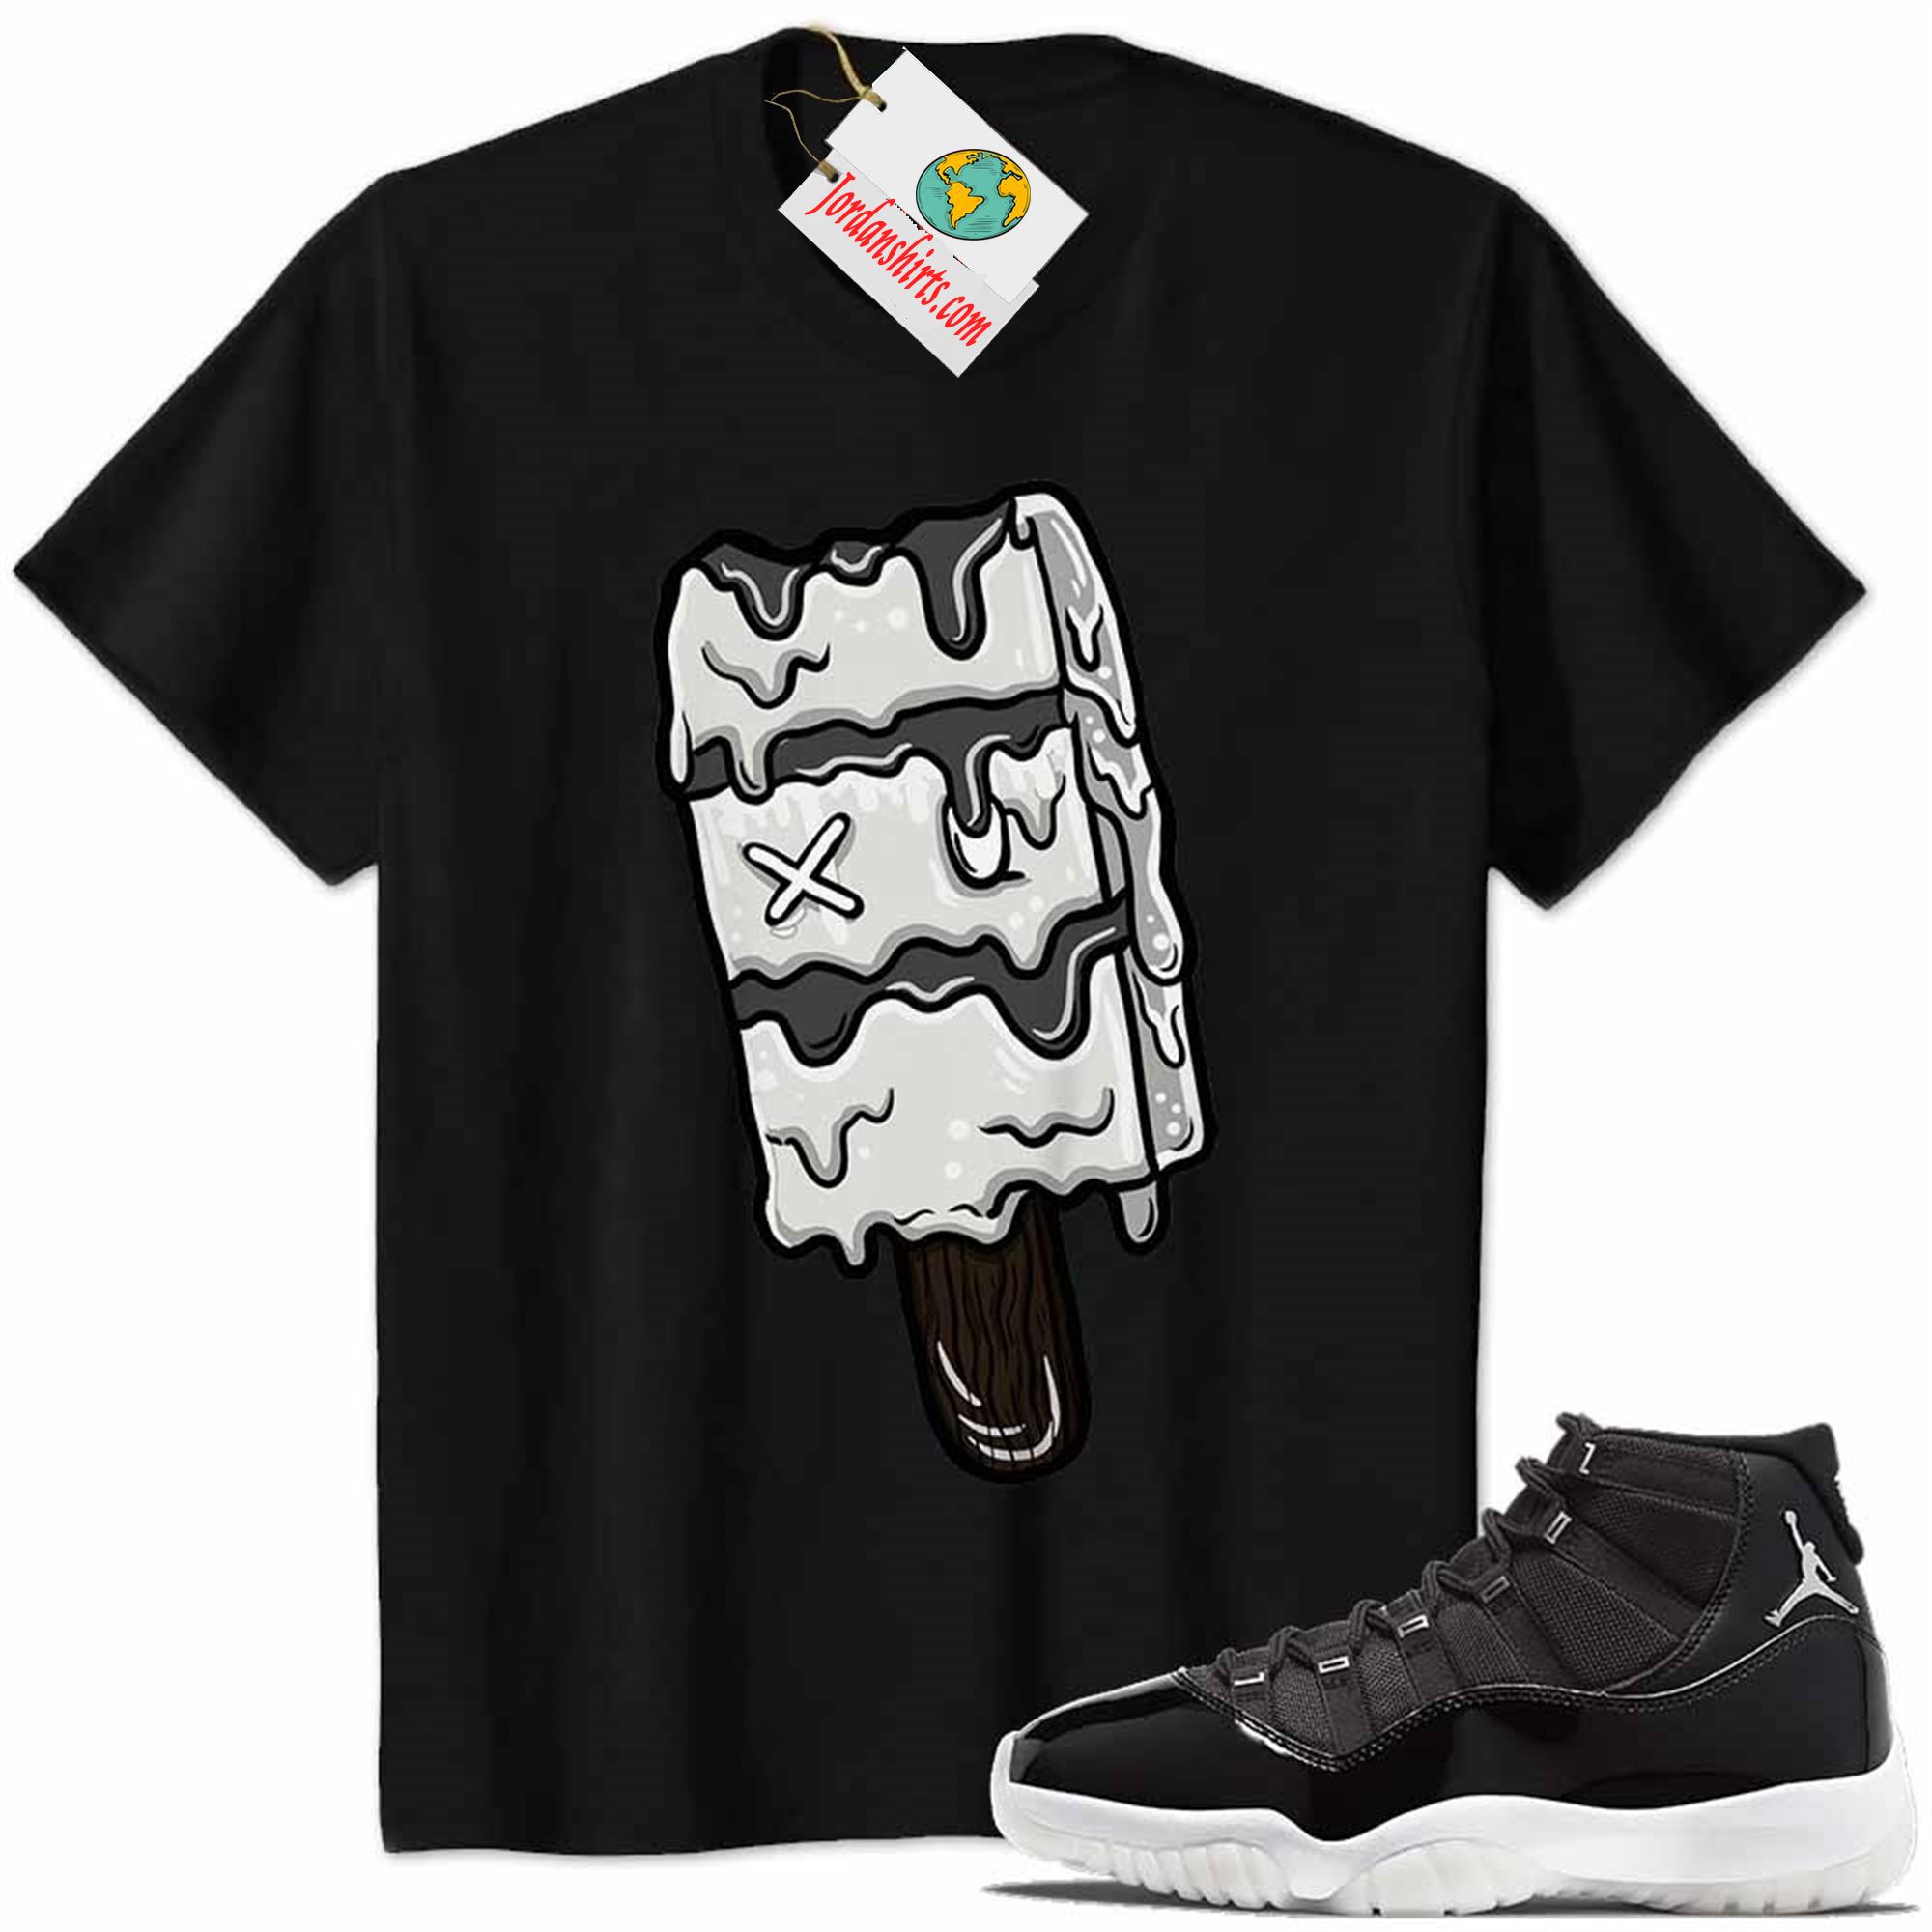 Jordan 11 Shirt, Ice Cream Dripping Black Air Jordan 11 Jubilee 11s Size Up To 5xl